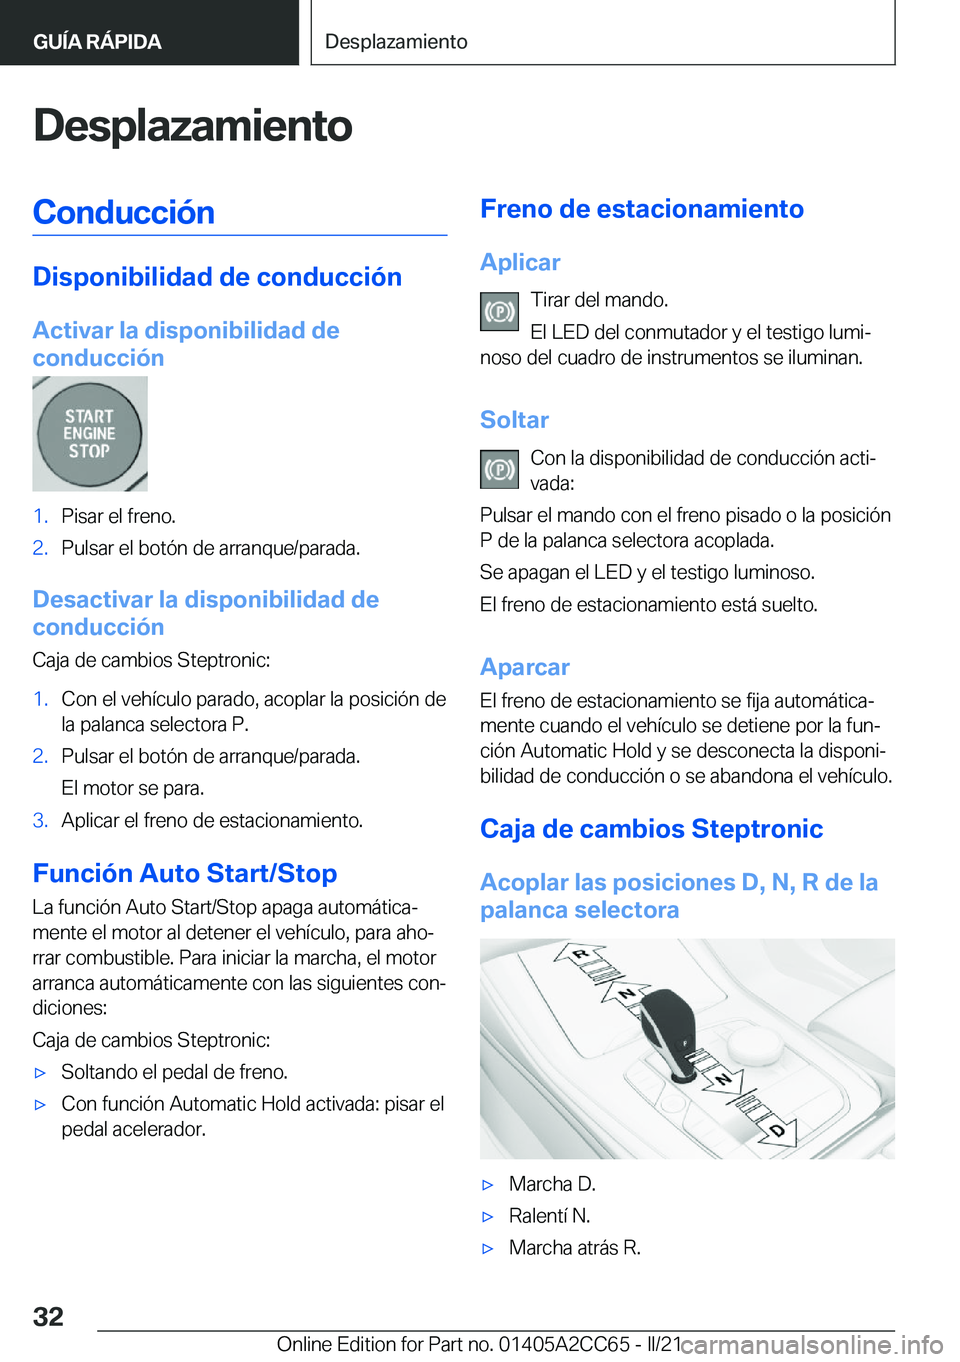 BMW 8 SERIES GRAN COUPE 2022  Manuales de Empleo (in Spanish) �D�e�s�p�l�a�z�a�m�i�e�n�t�o�C�o�n�d�u�c�c�i�